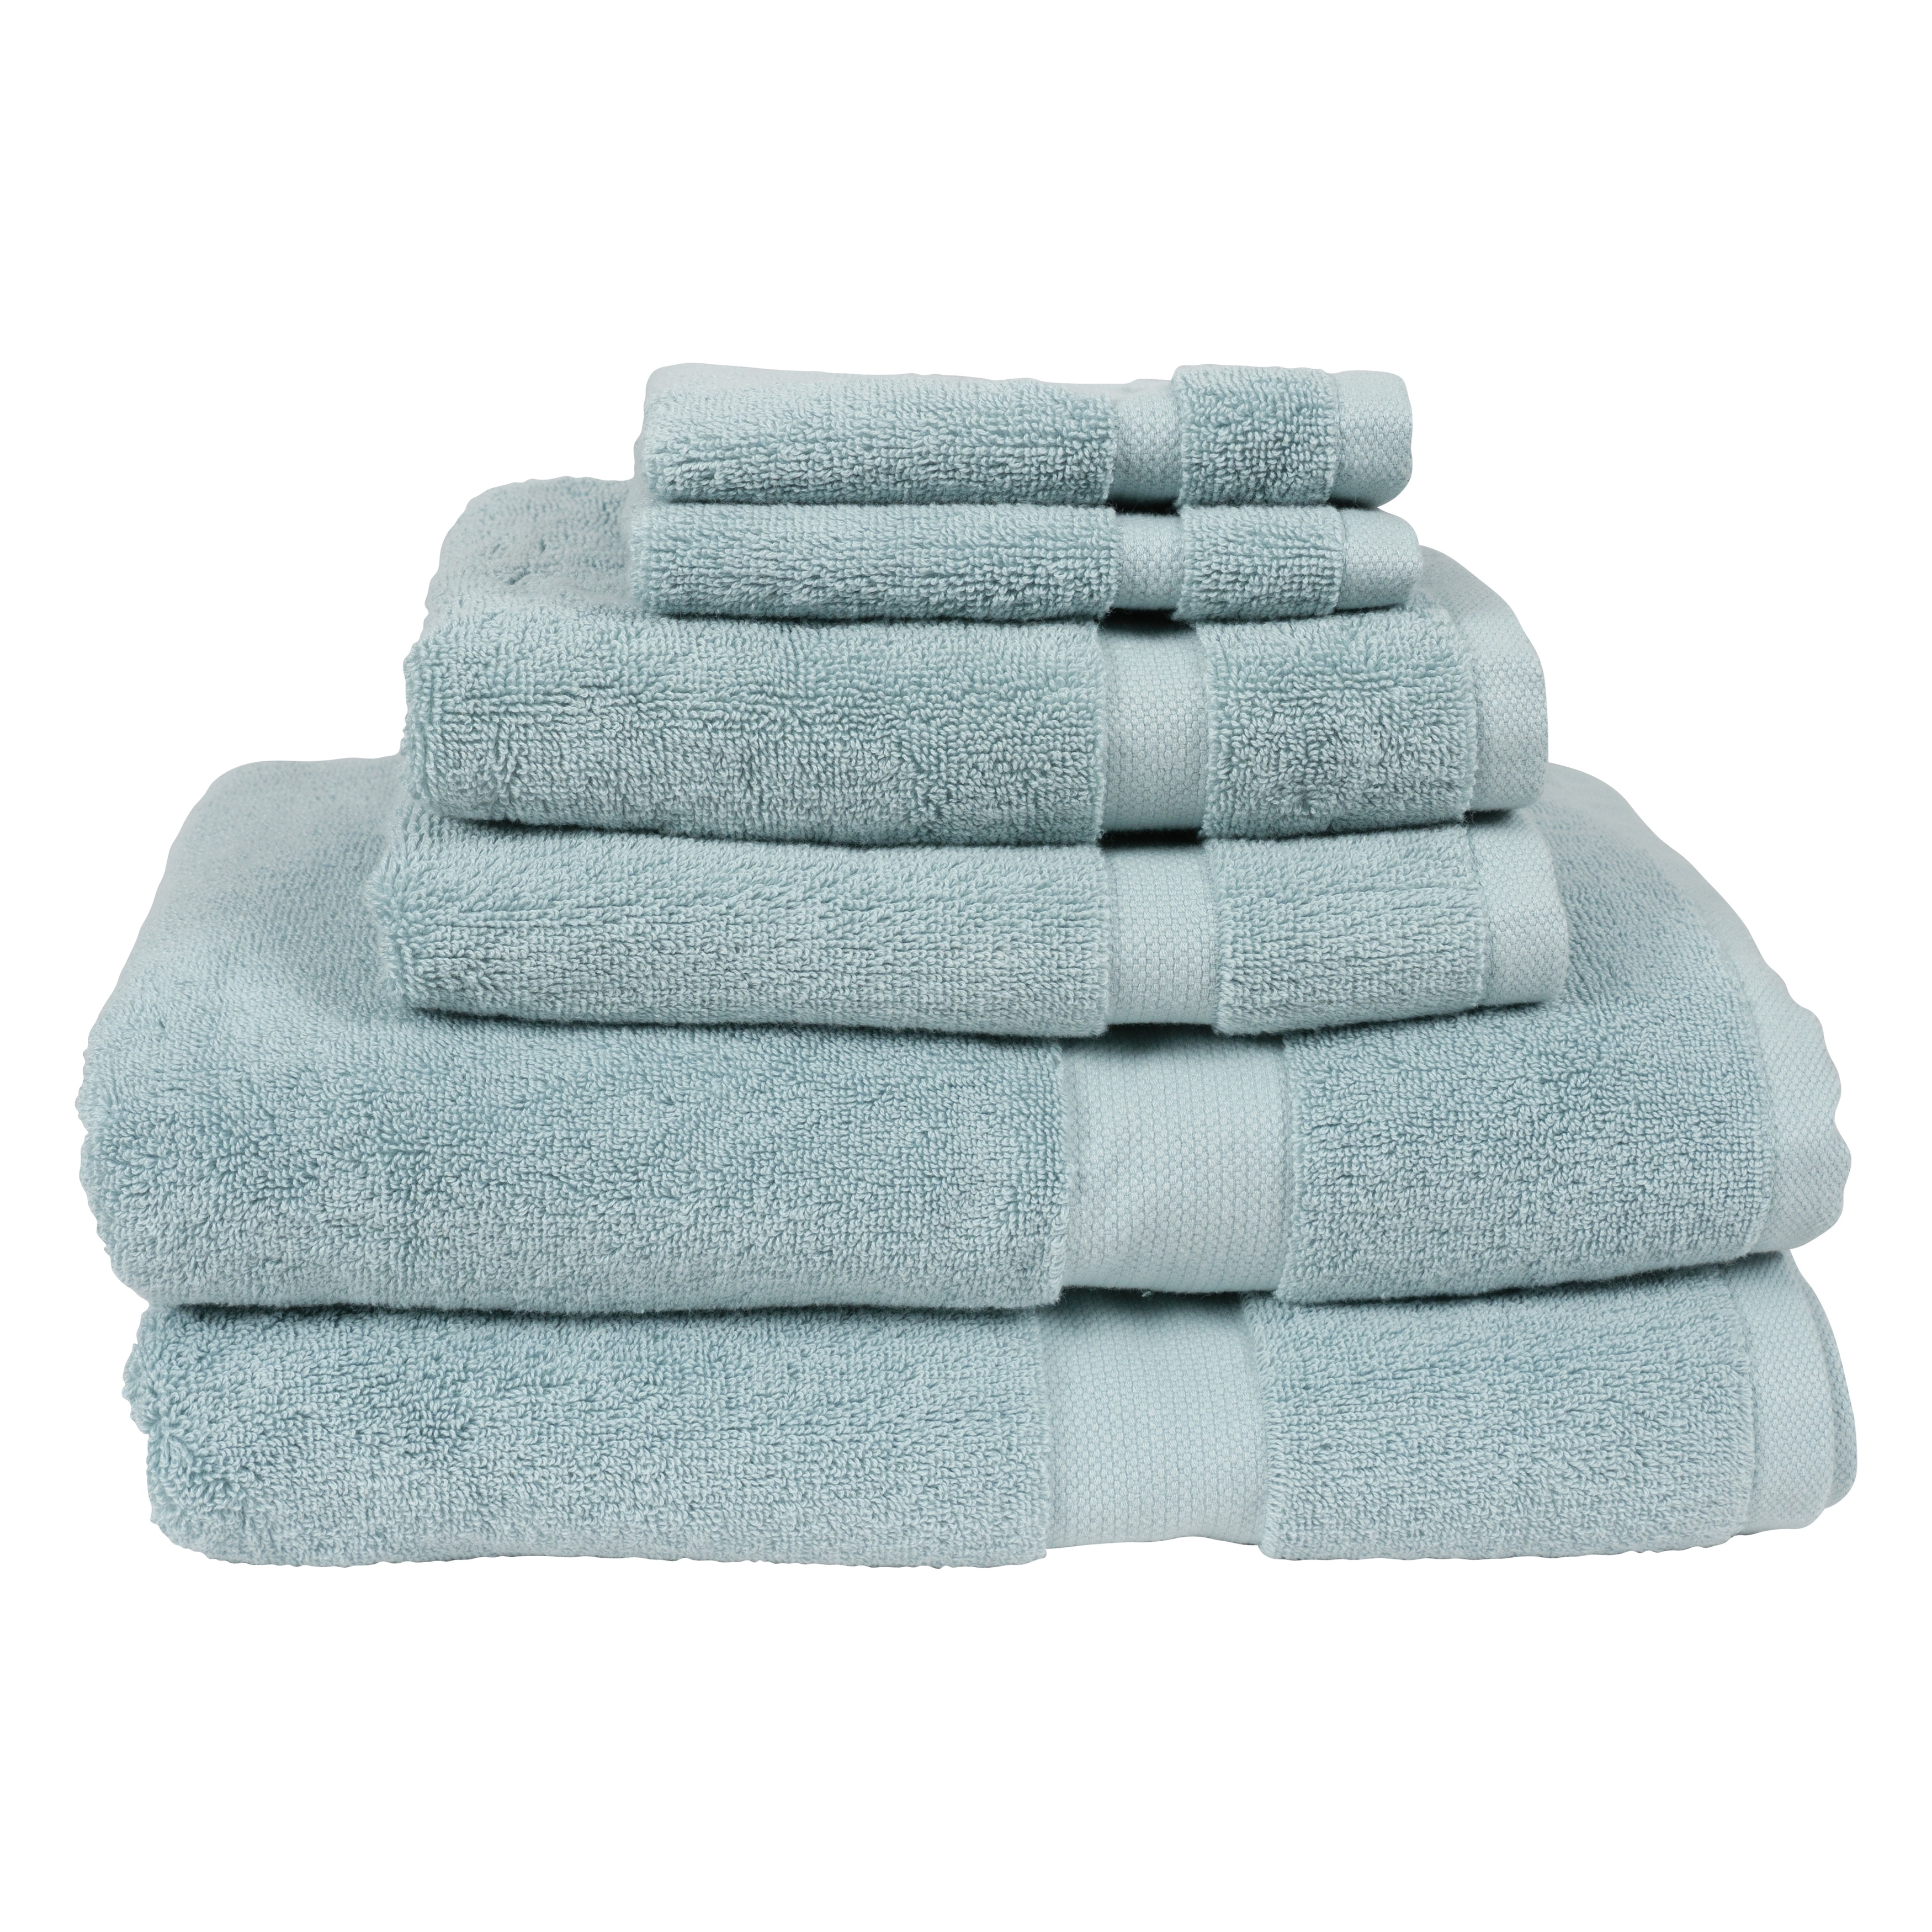 LANE LINEN 100% Cotton Bath Towels Set Of 10, 2 Large Bathroom Towels, 4  Soft Hand Towels For Bathroom, 4 Wash Towels For Body, Large Gym S